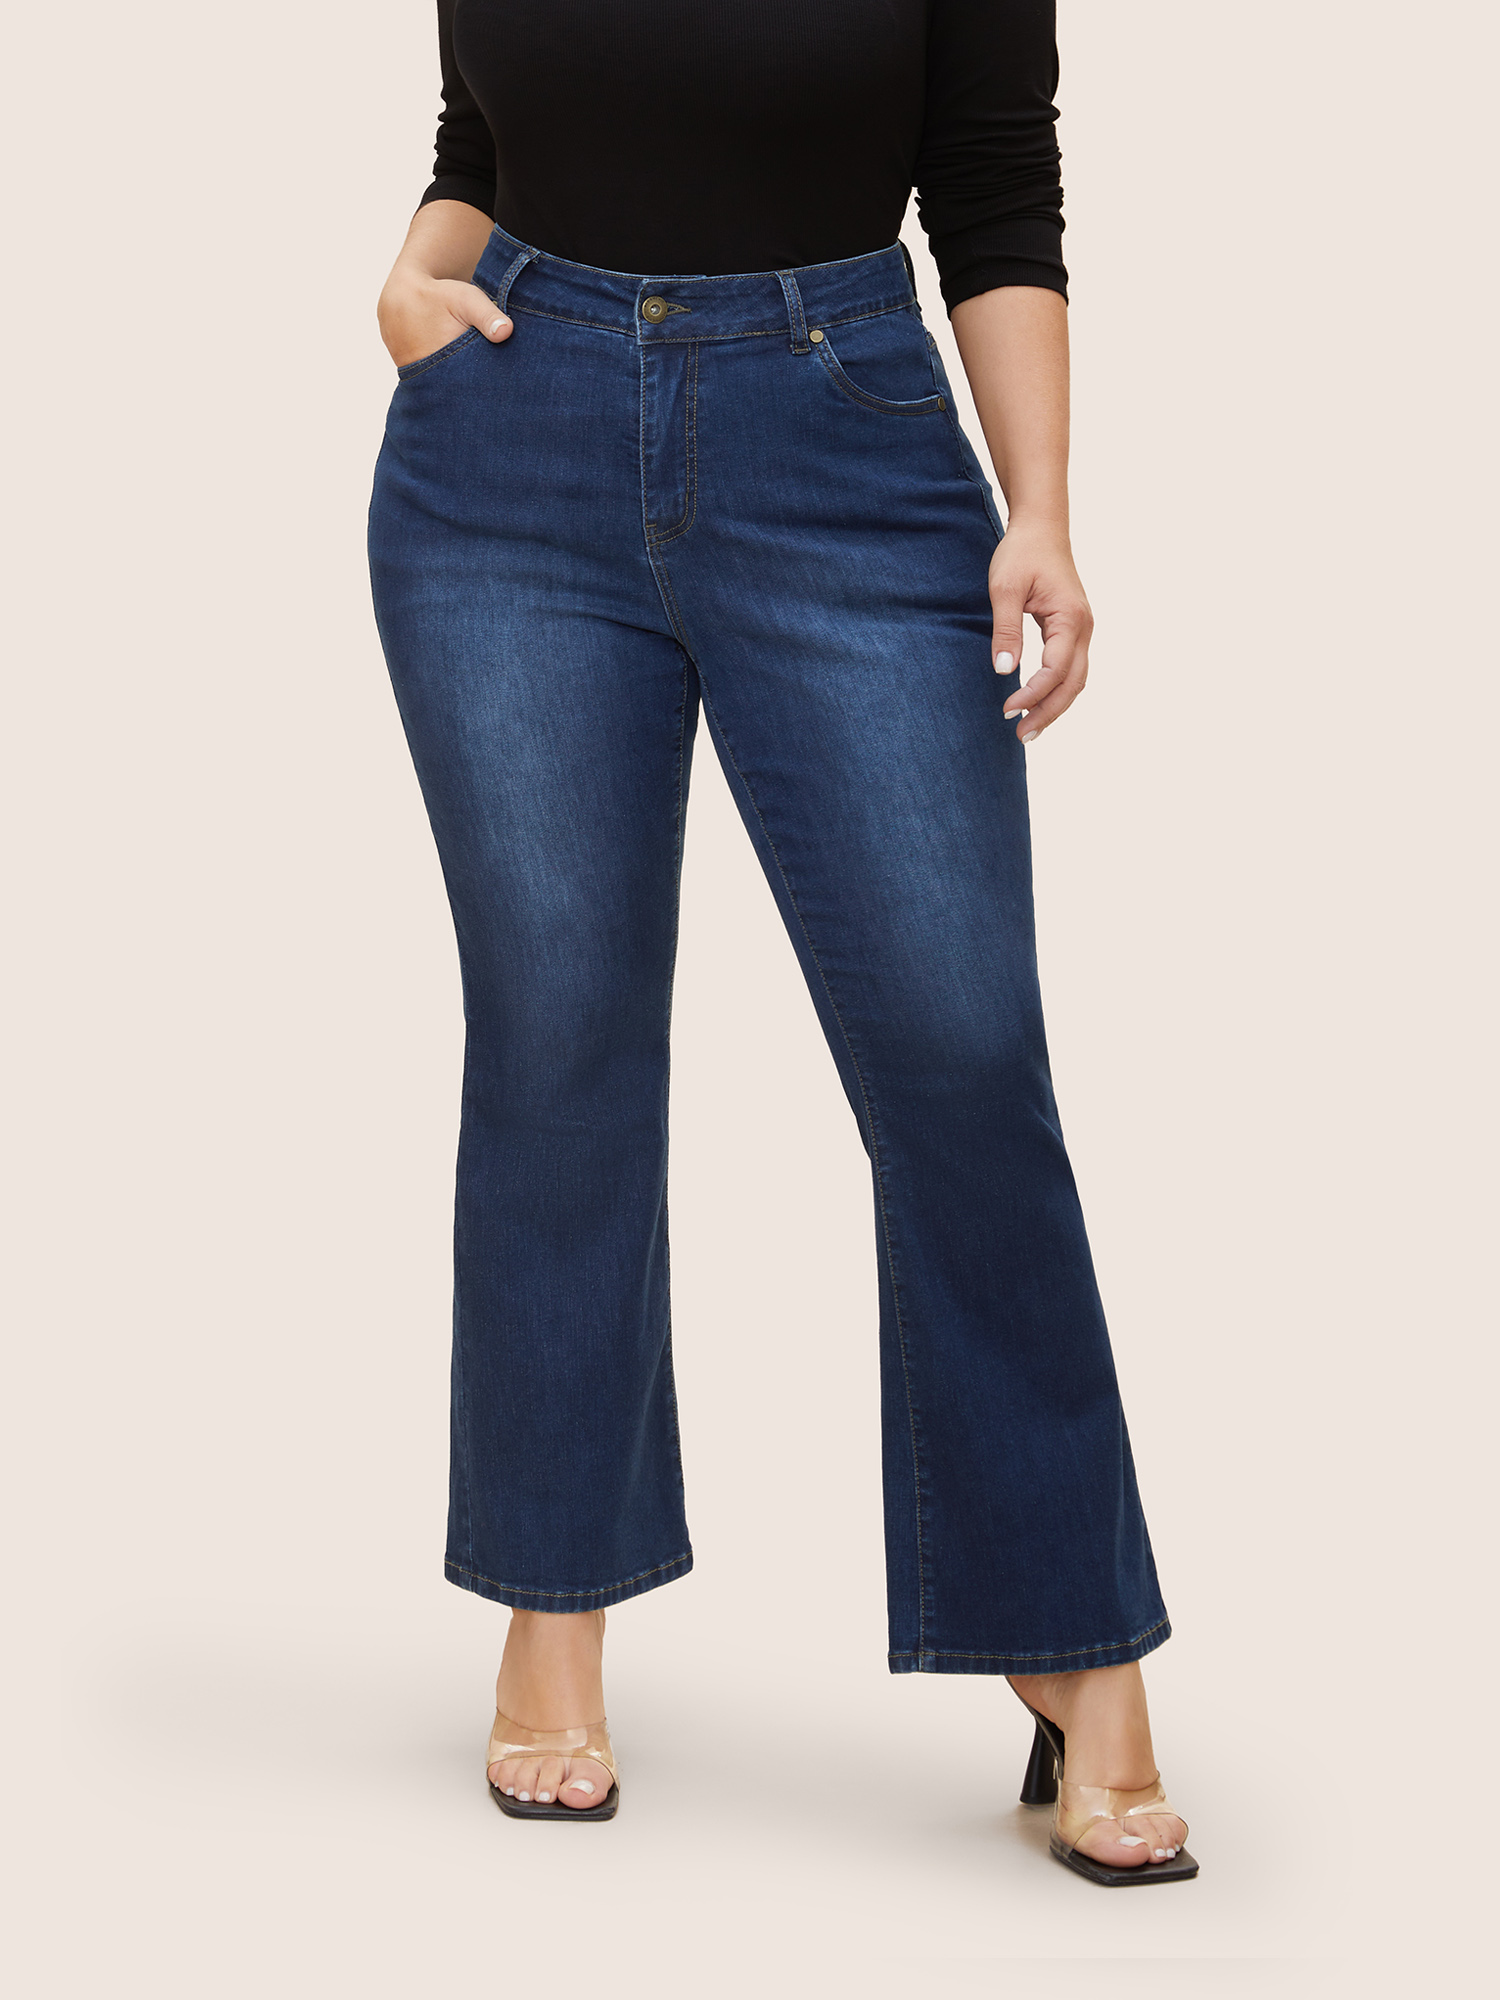 

Plus Size High Stretch Dark Wash Bootcut Jeans Women Denimindigo Casual Button High stretch Slanted pocket Jeans BloomChic